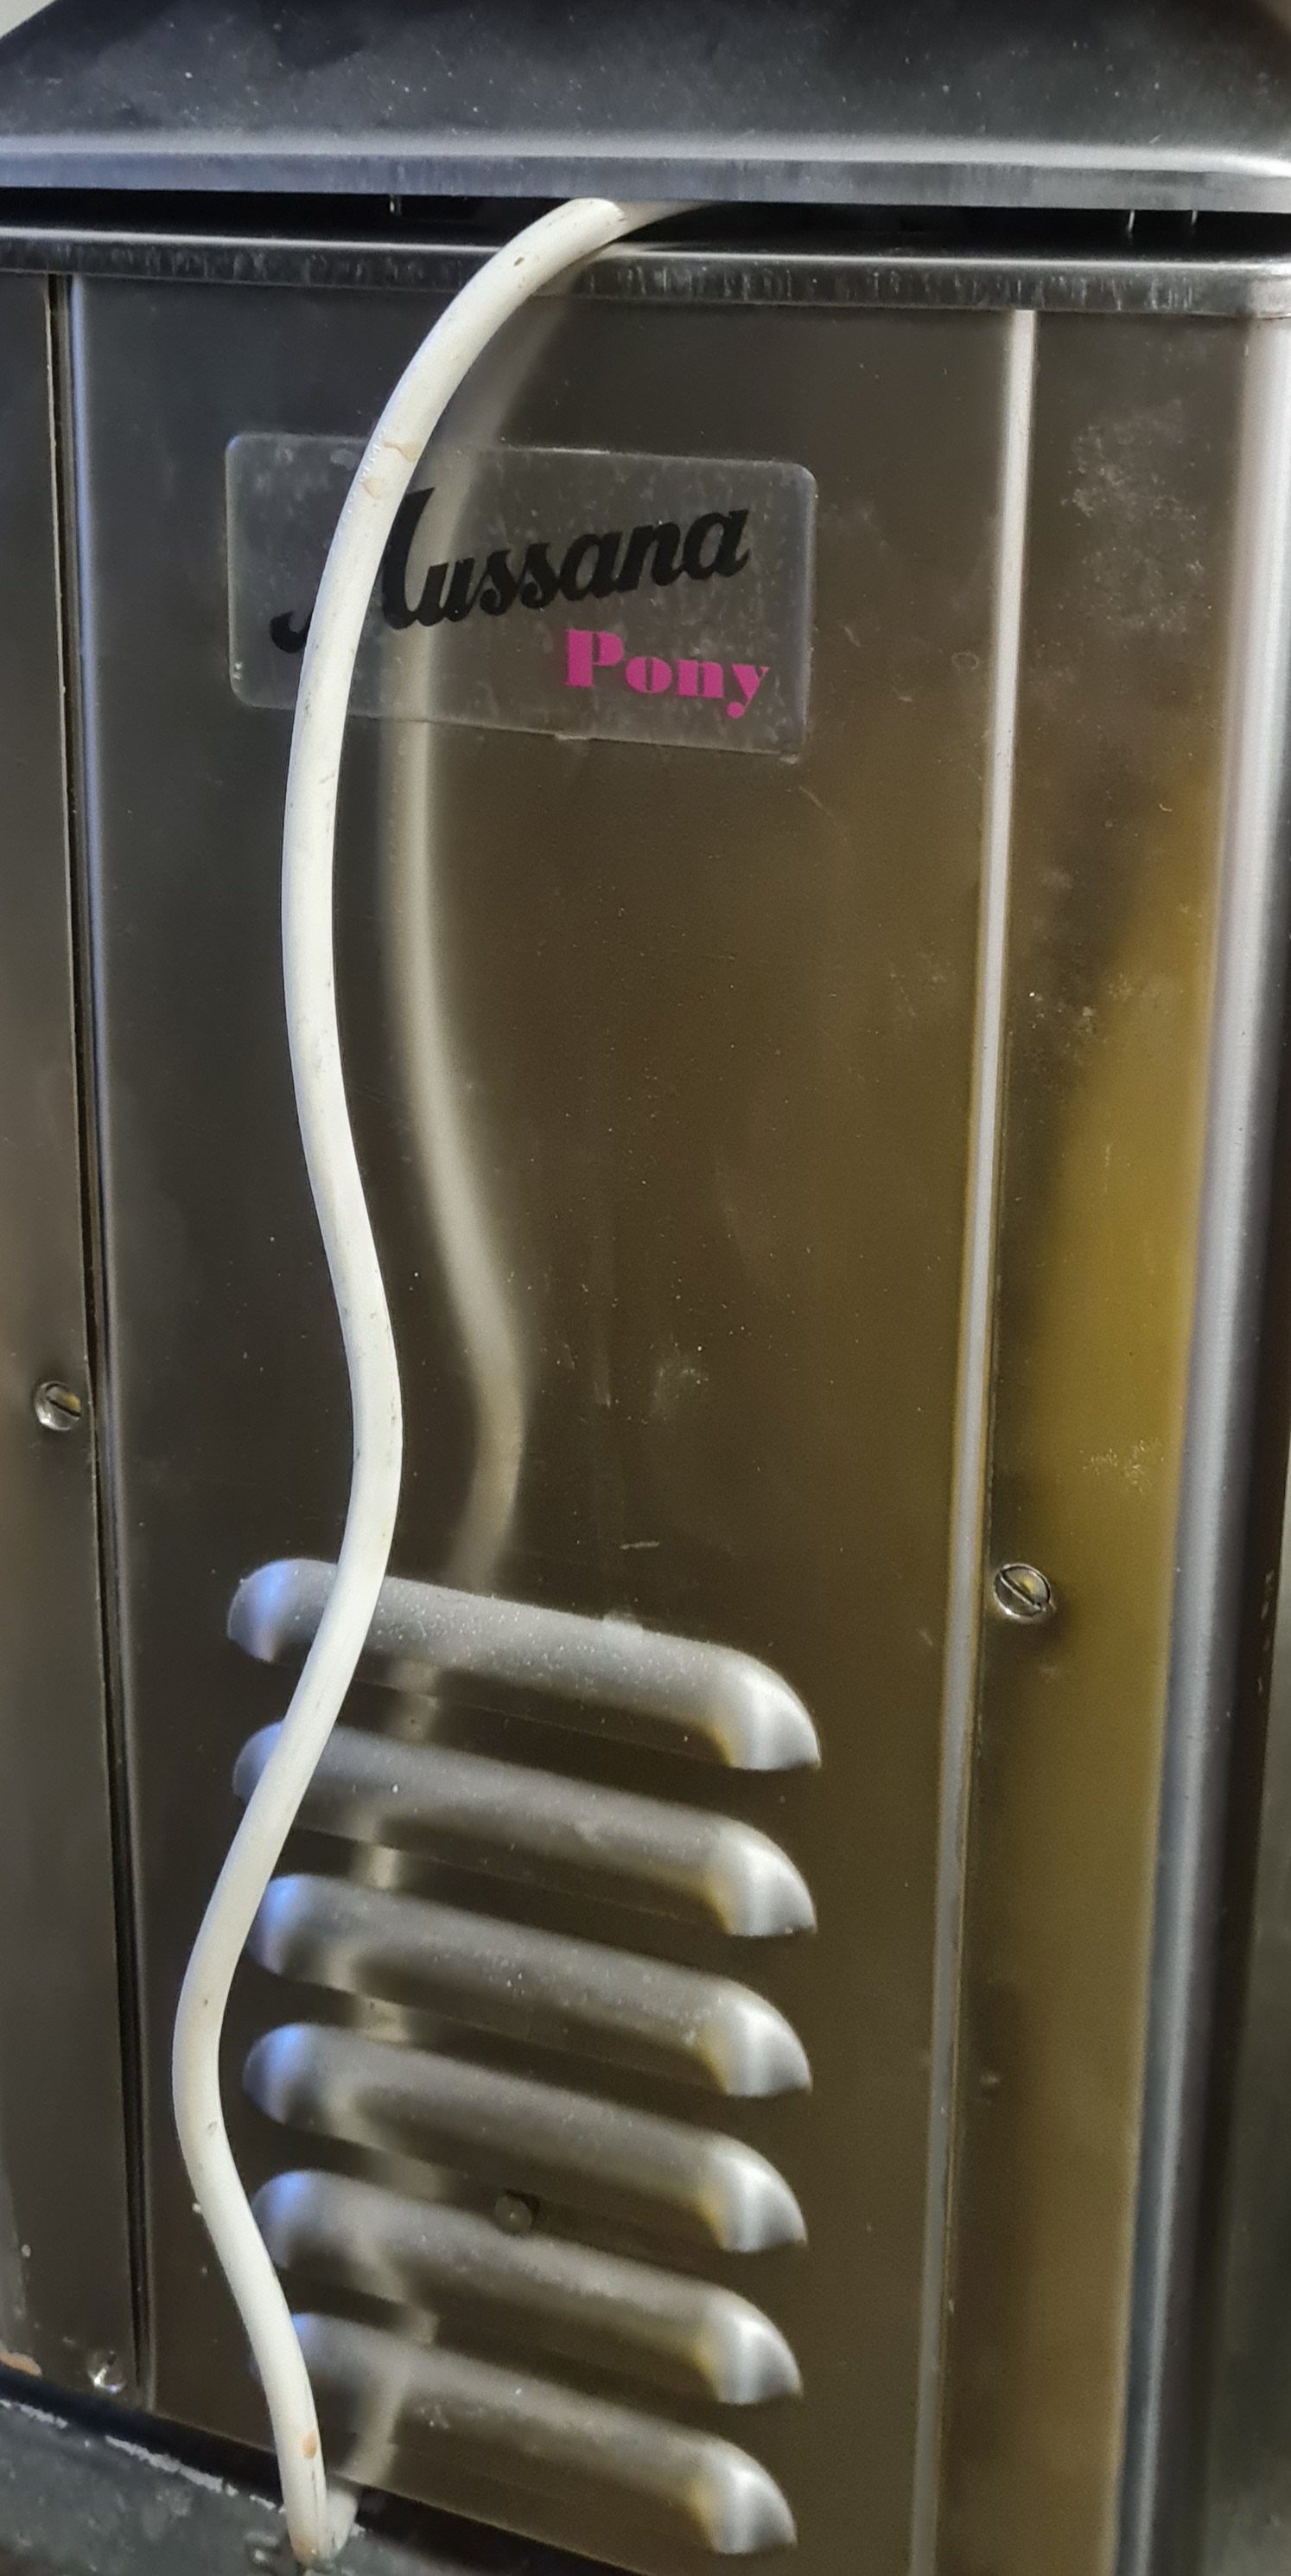 Mussana Pony Sahnemaschine 2-Liter inkl. Reinigungsautomatik